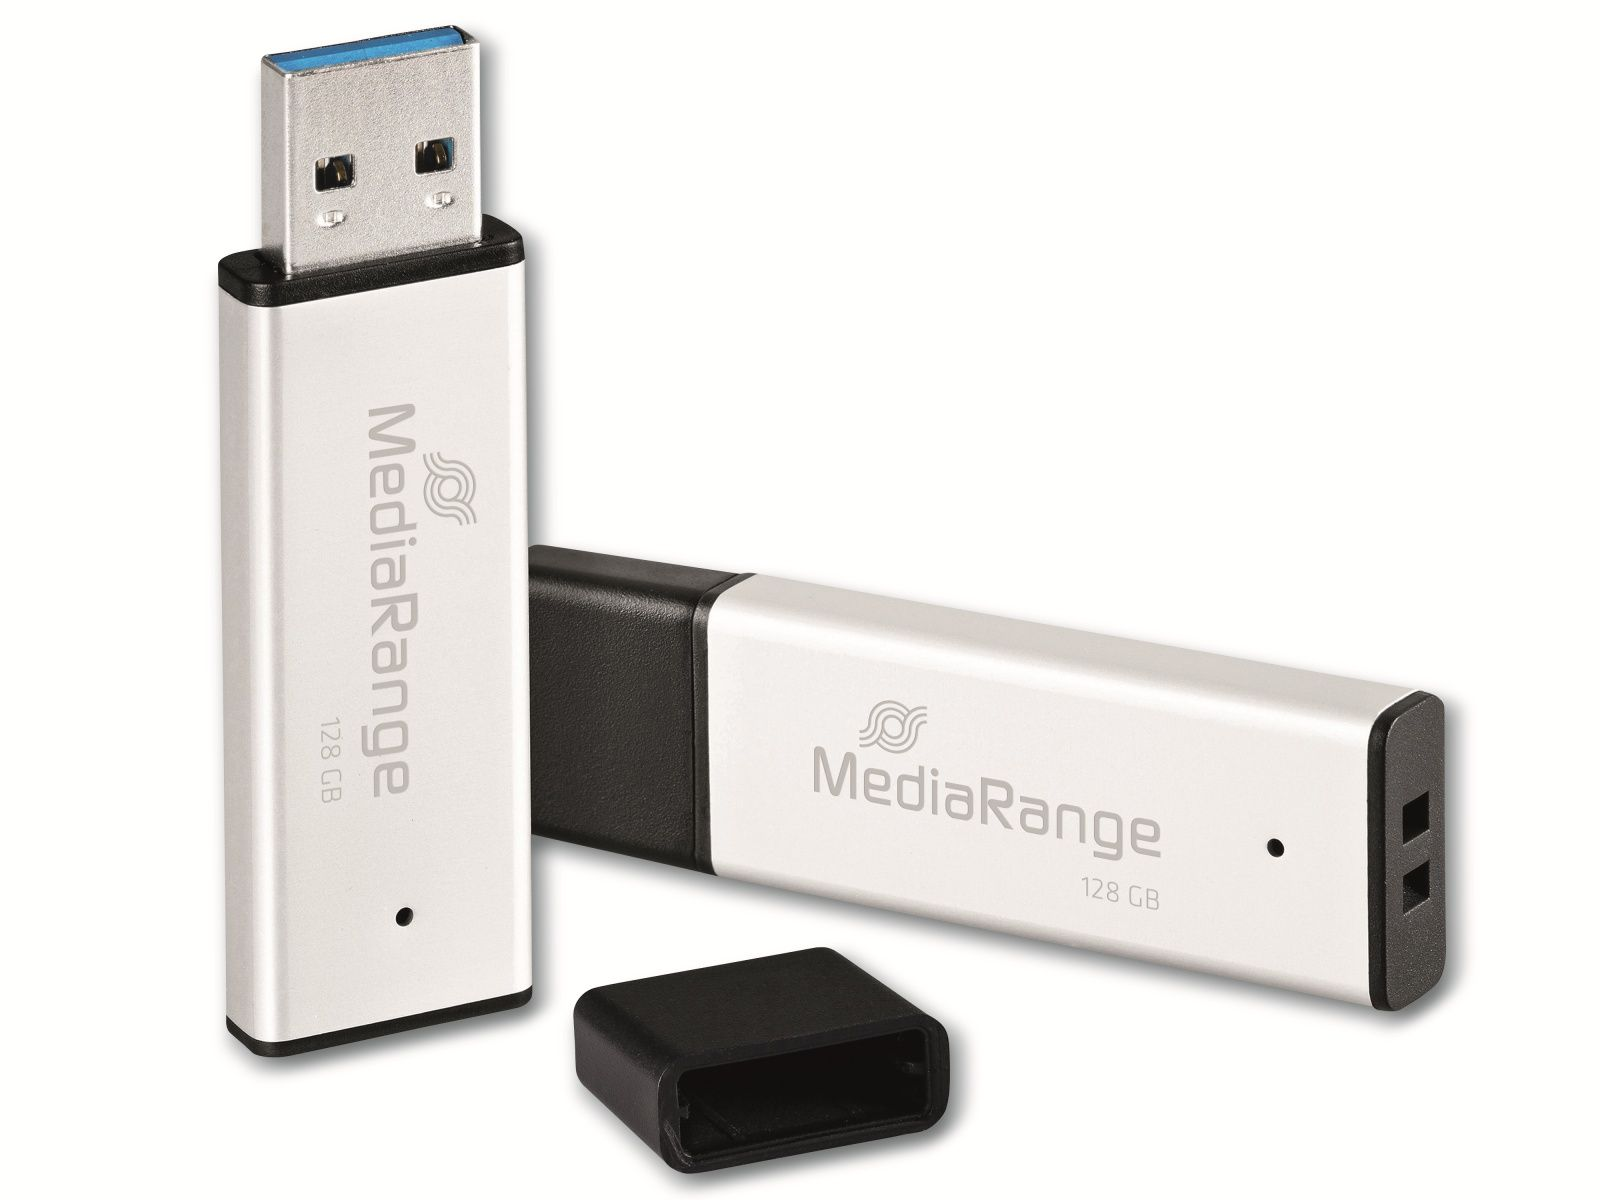 128 (schwarz/silber, 3.0, USB-Stick MR1902, USB USB-Stick GB MEDIARANGE 128 GB)